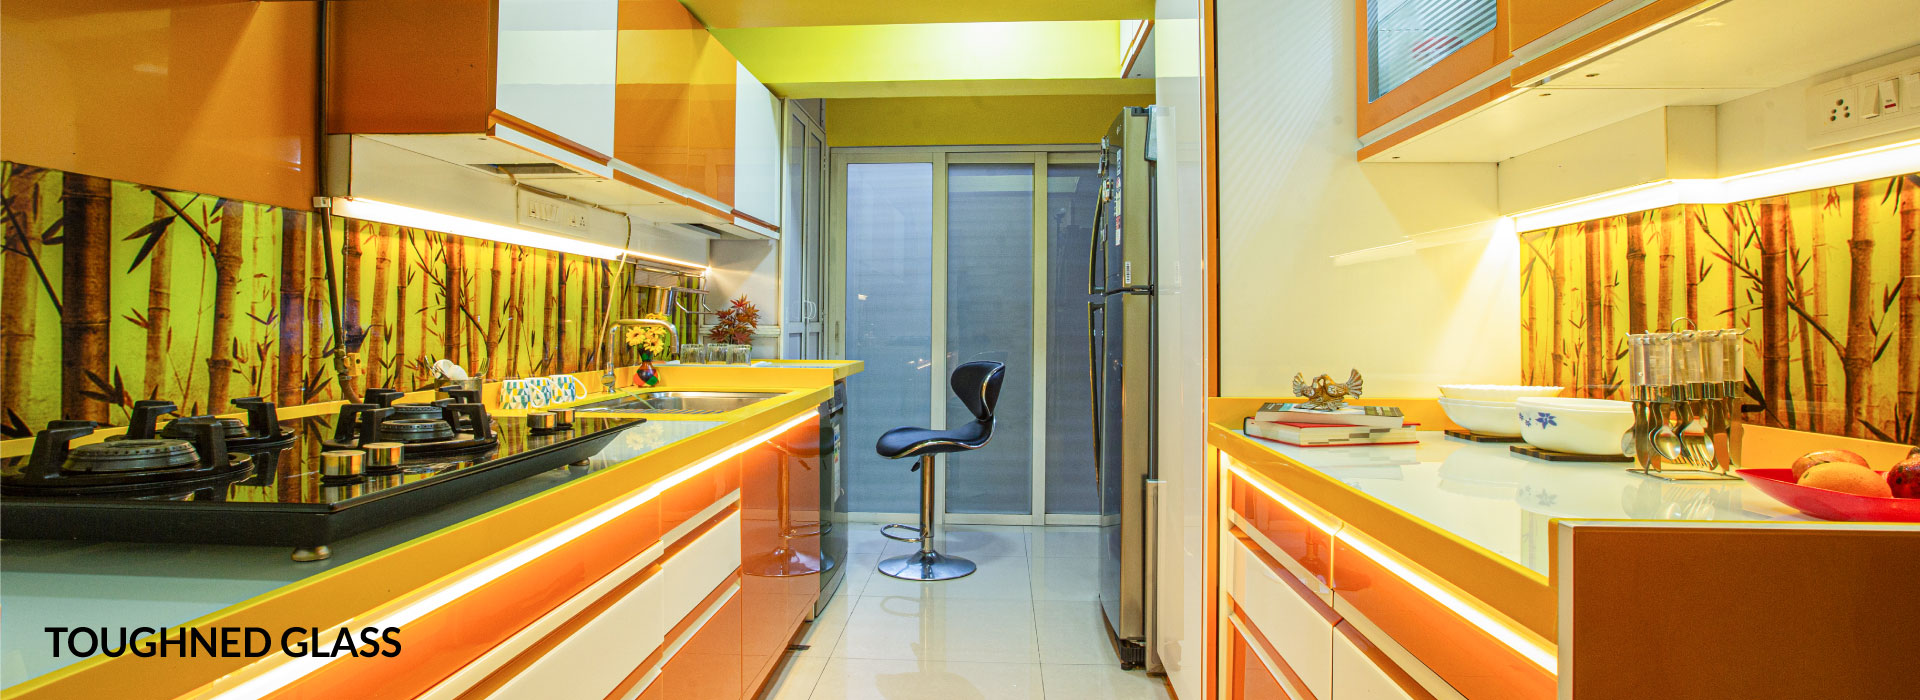 Toughned Glass Modular Kitchen | Promkraft Interior